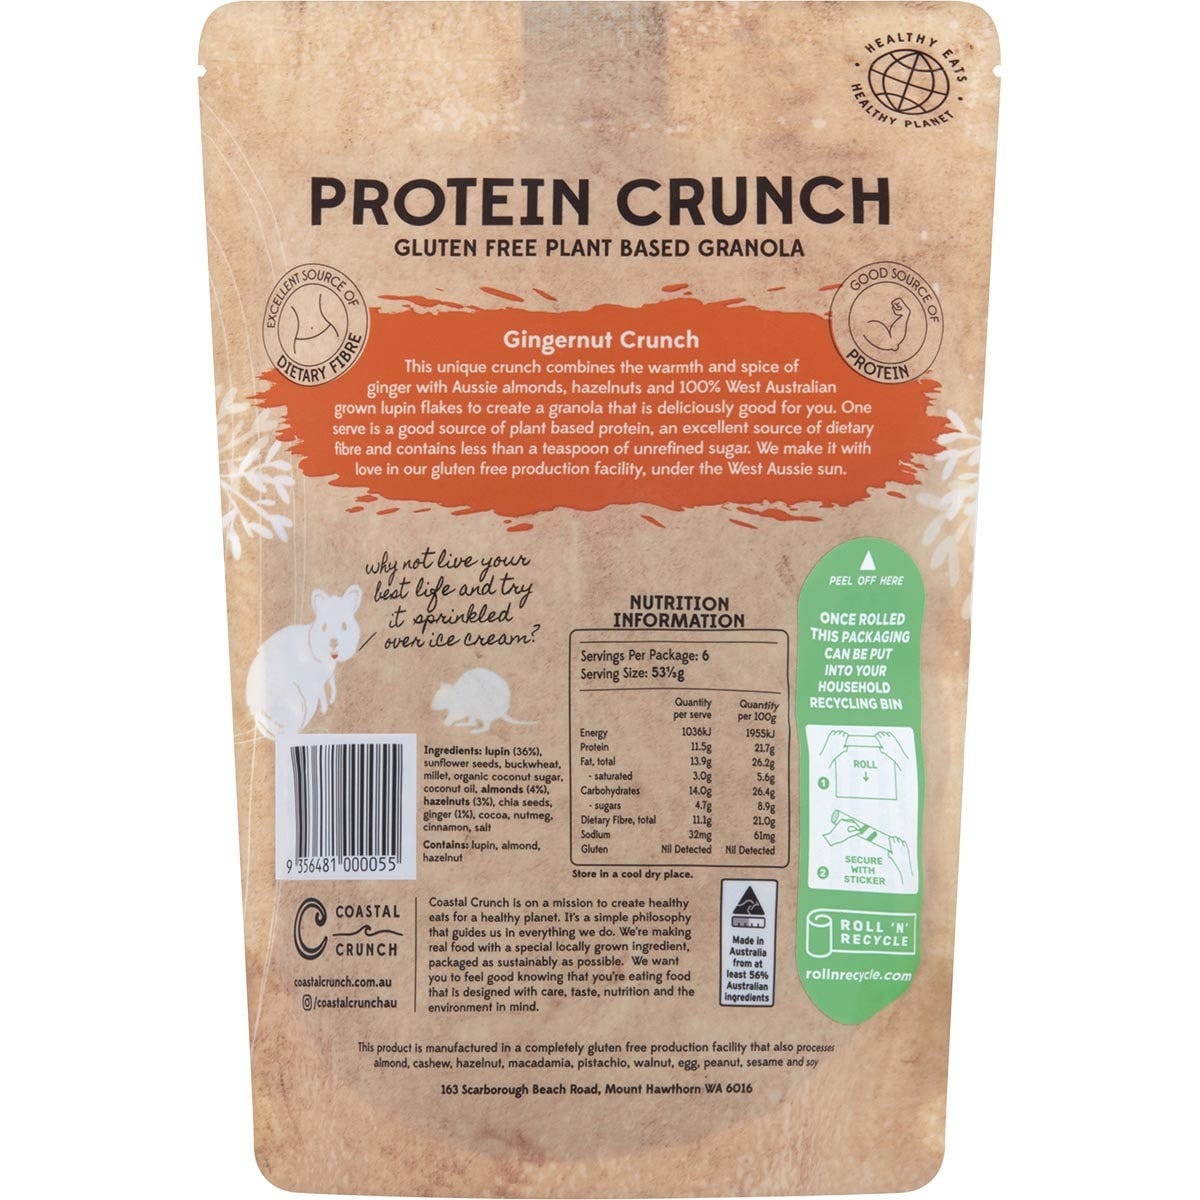 Coastal Crunch Protein Crunch Granola Gingernut Crunch 320g - Dr Earth - Breakfast